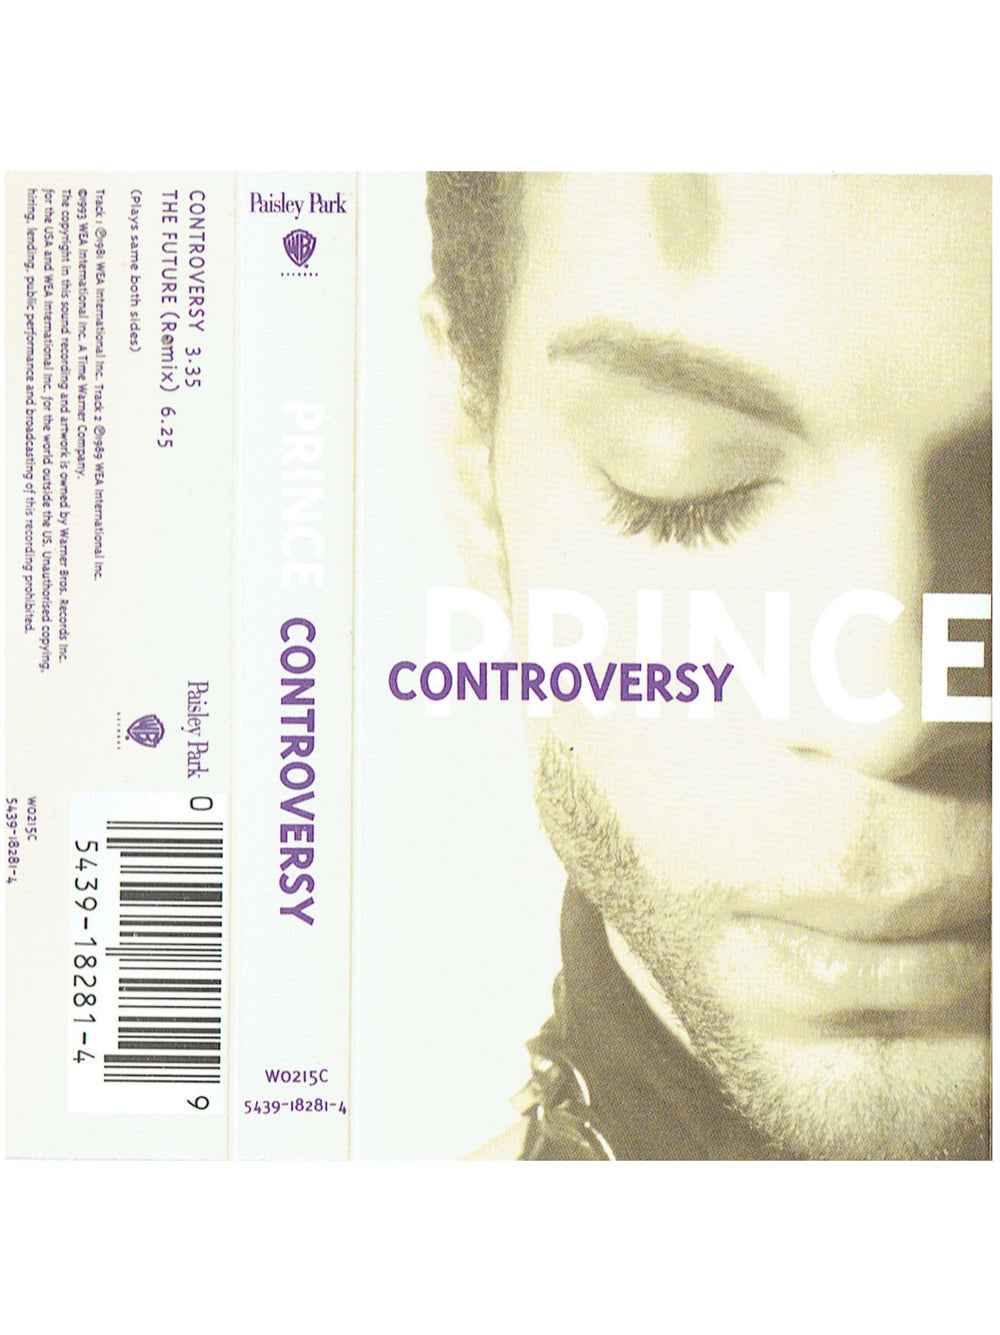 Prince - Controversy The Future Cassette Tape UK Single Preloved: 1993